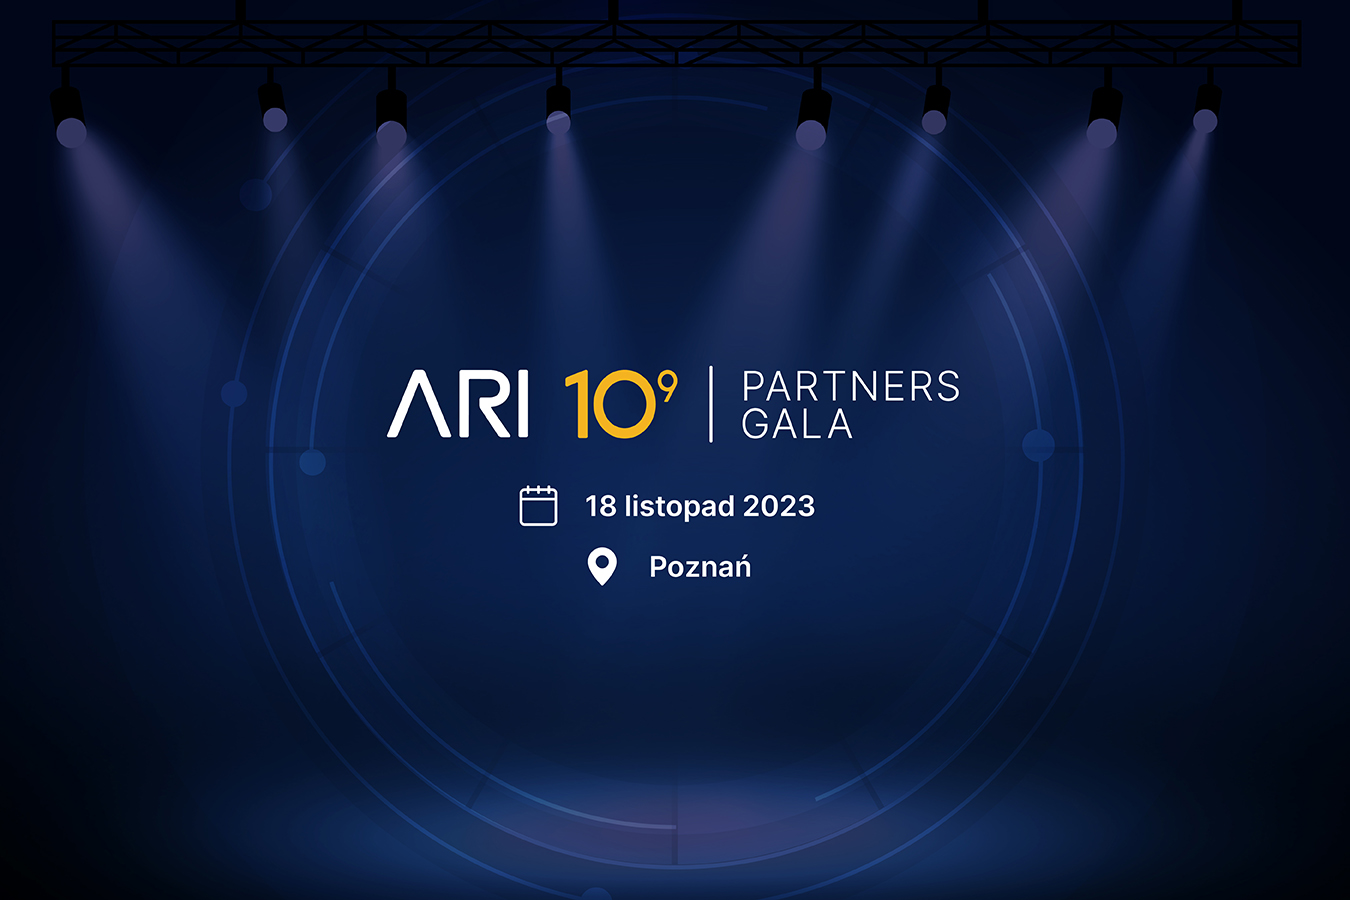 Ari10 Partners Gala – zrobiliśmy krypto event!